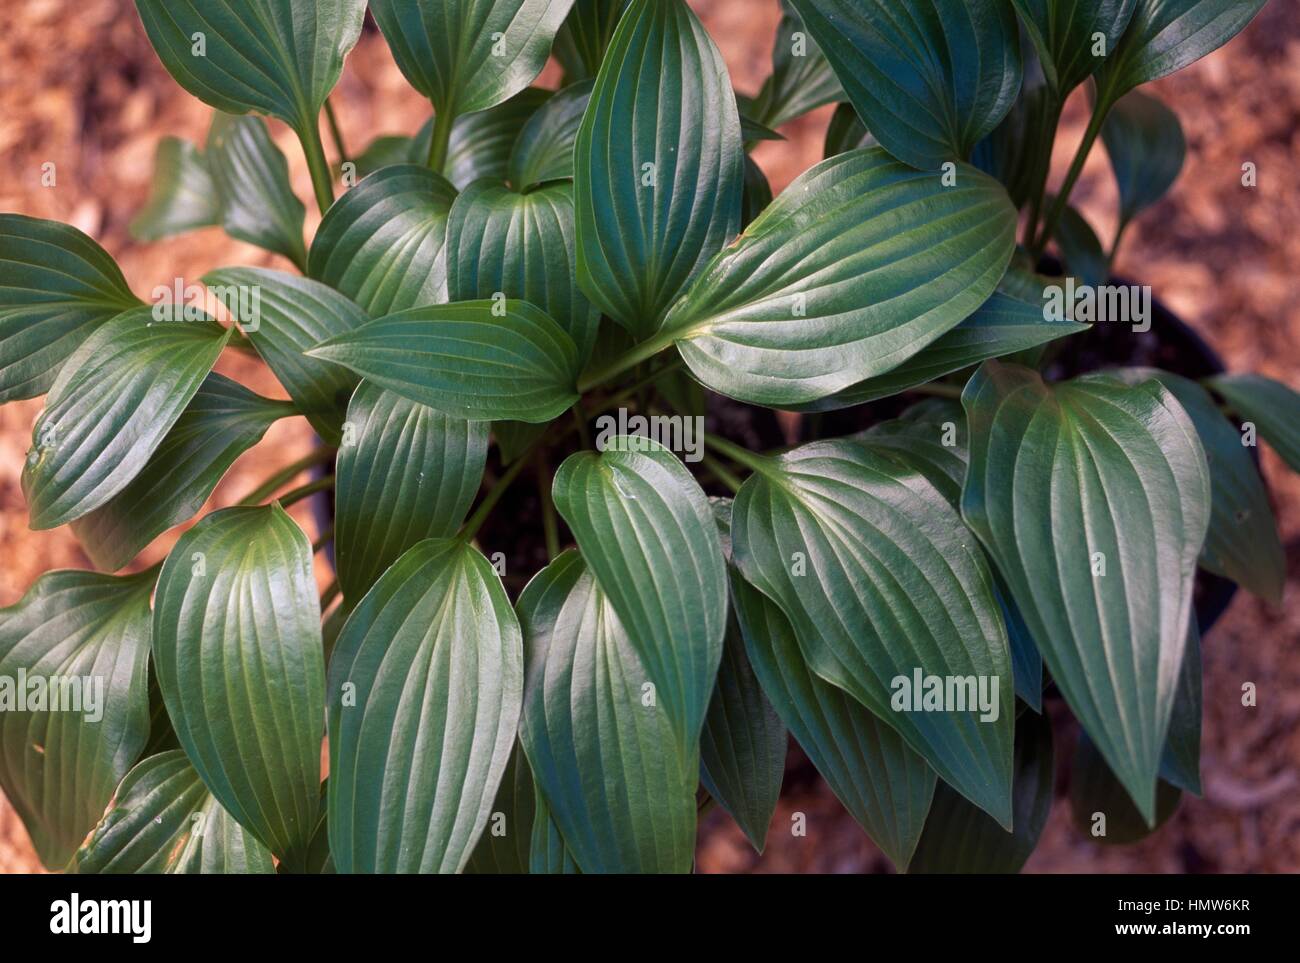 Narrow leaved plantain lily (Hosta lancifolia), Liliaceae. Stock Photo